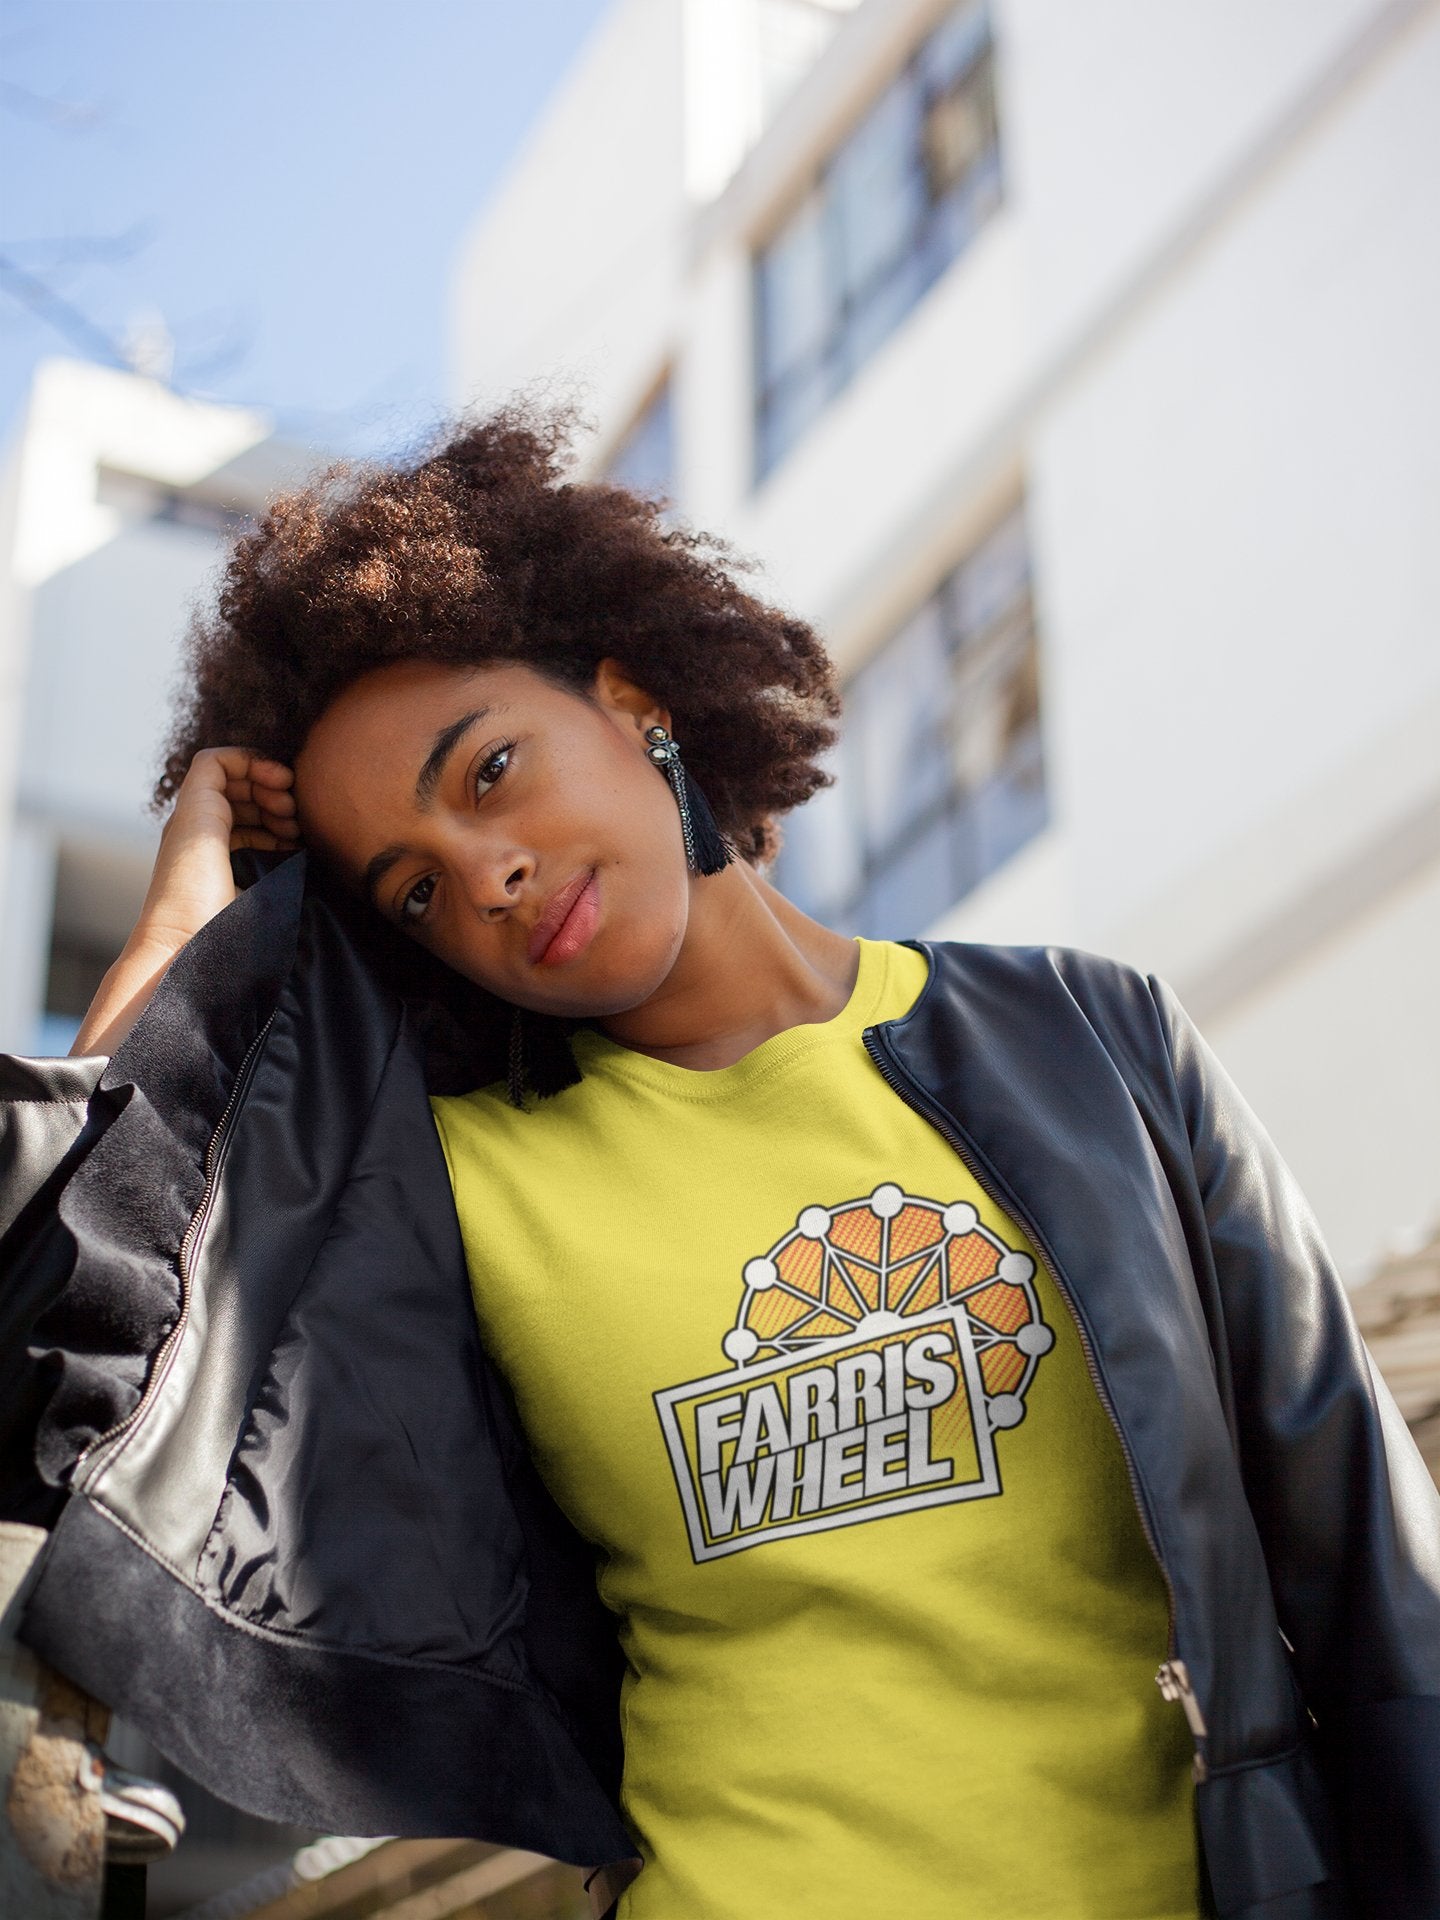 Farris Wheel Heat Wave Unisex T-shirt - BeExtra! Apparel & More